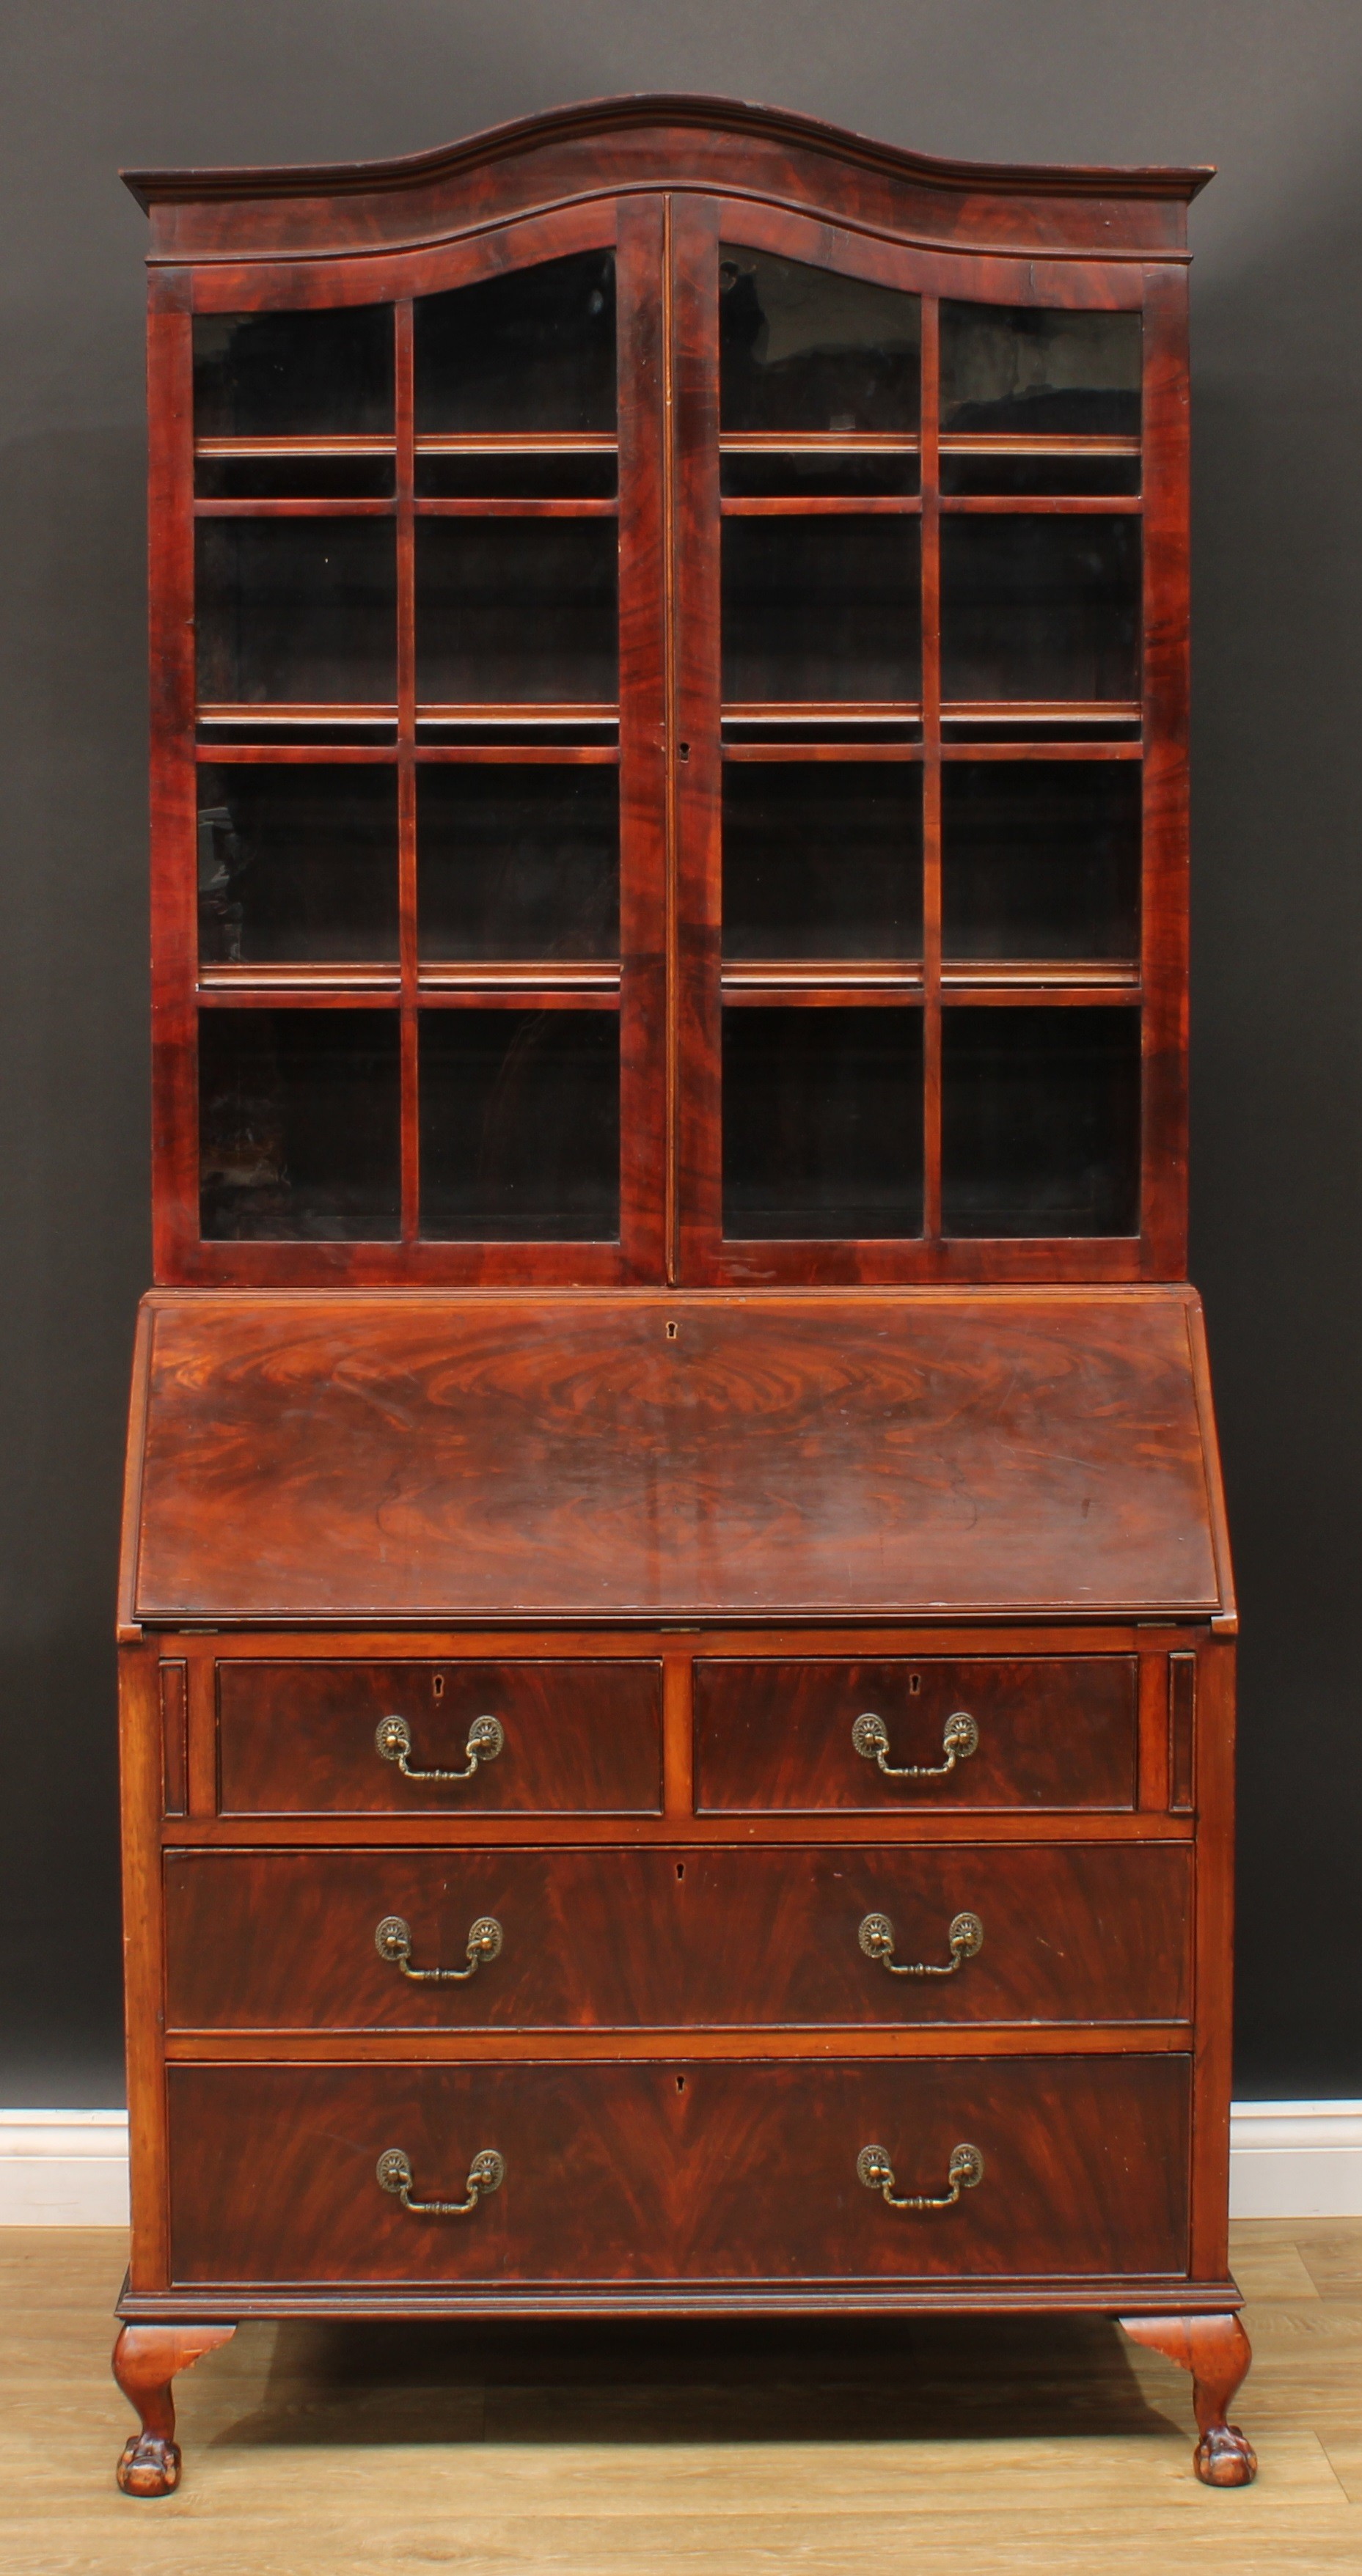 An early 20th century mahogany bureau bookcase, by Maple & Co, 201cm high, 95cm wide, 47cm deep